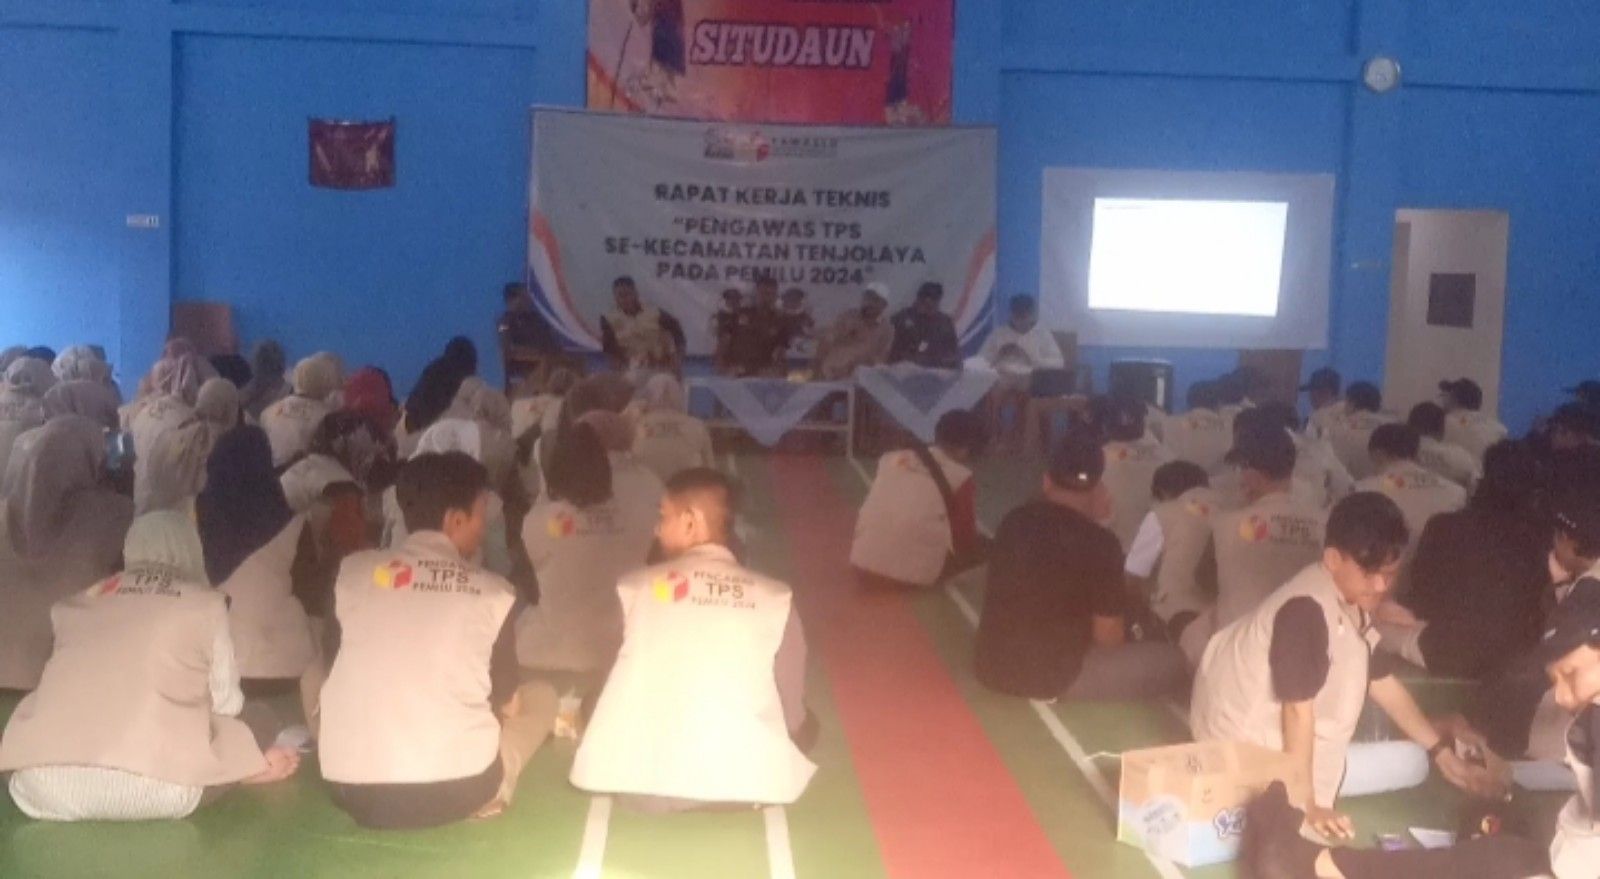 Pengawas TPS se-Kecamatan Tenjolaya Gelar Raker Teknis siap Hadapi Hari H Pemilu 2024